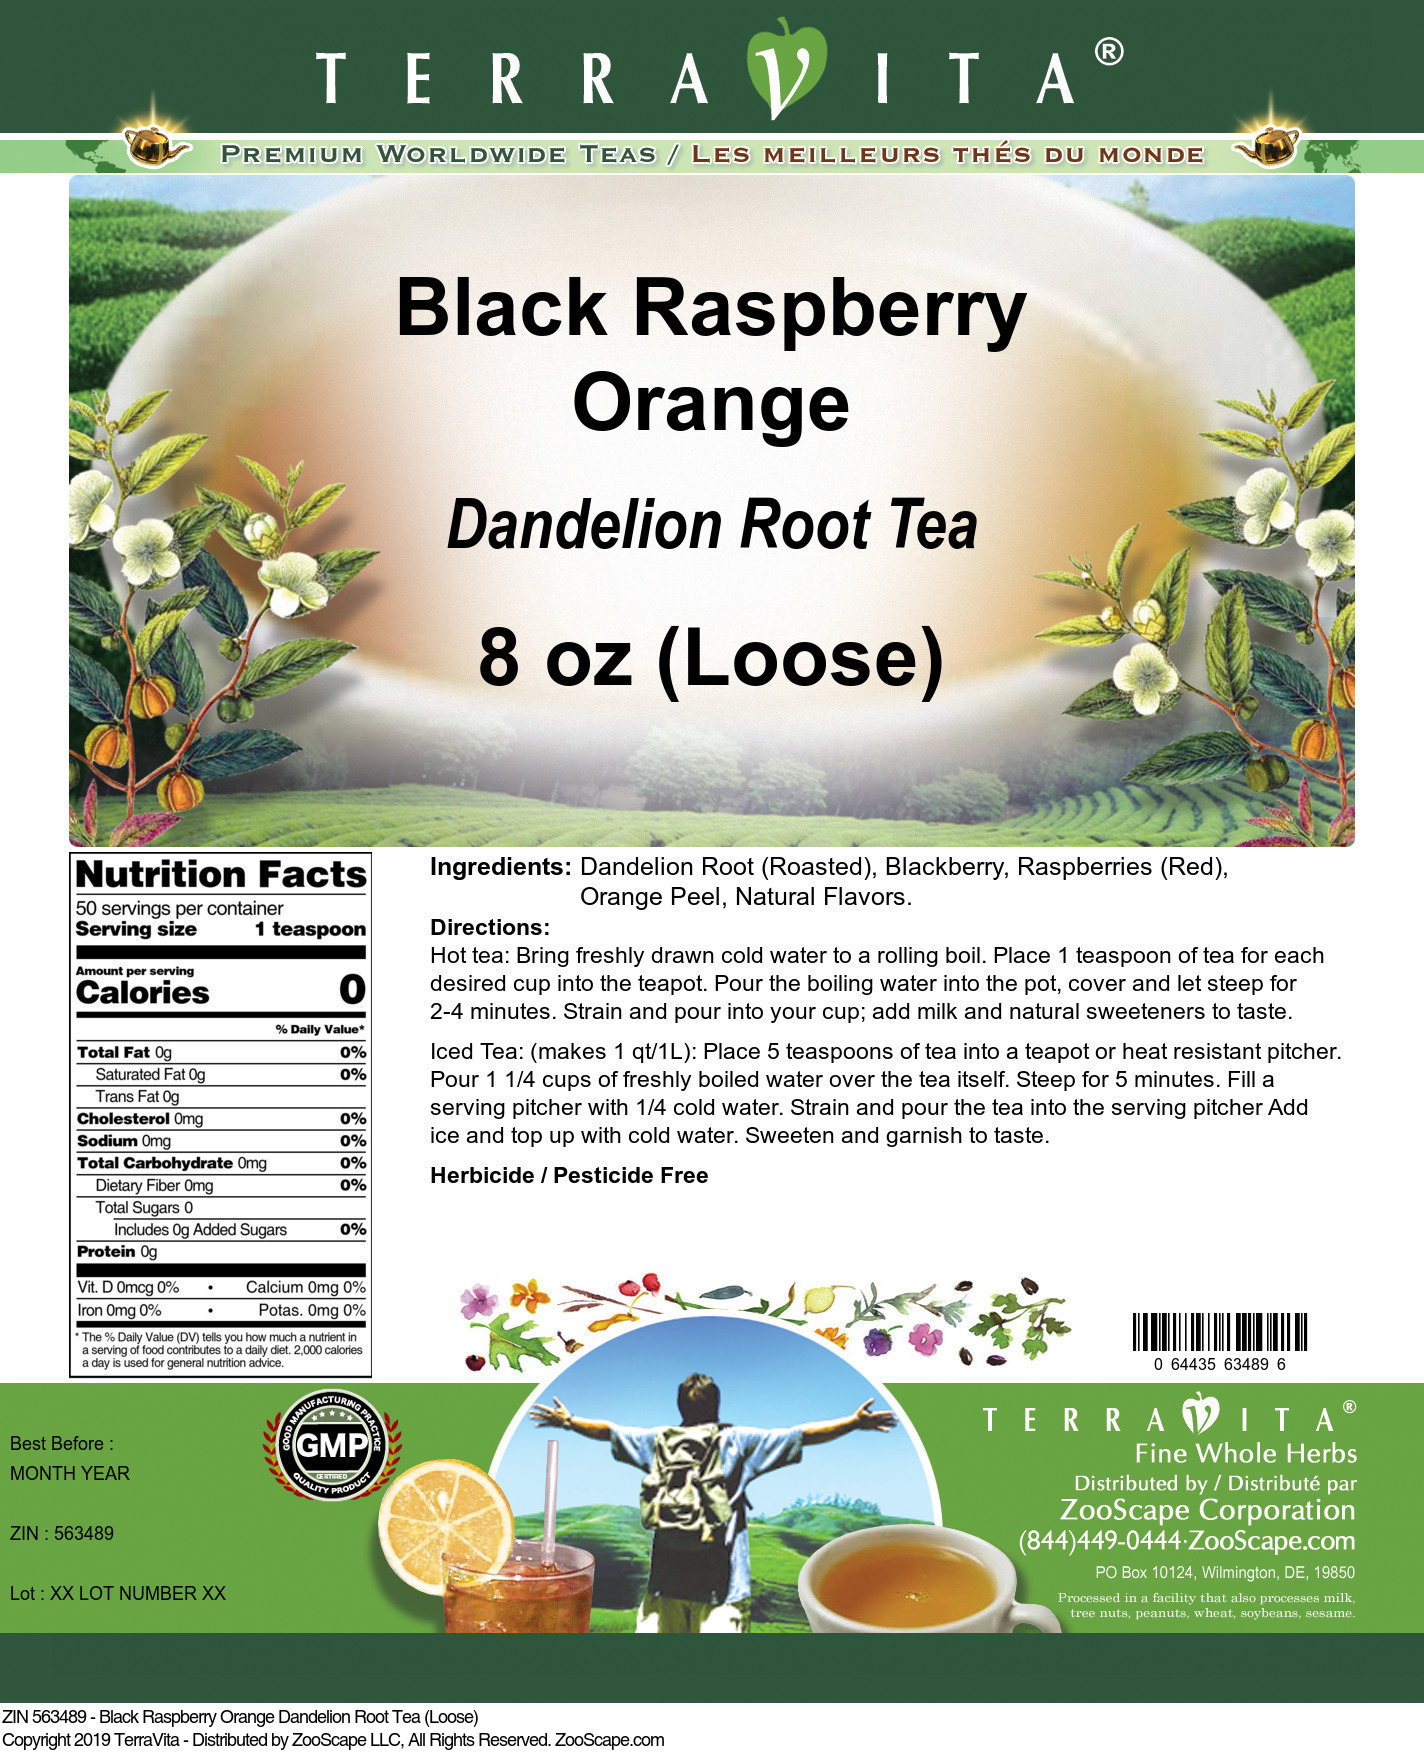 Black Raspberry Orange Dandelion Root Tea (Loose) - Label